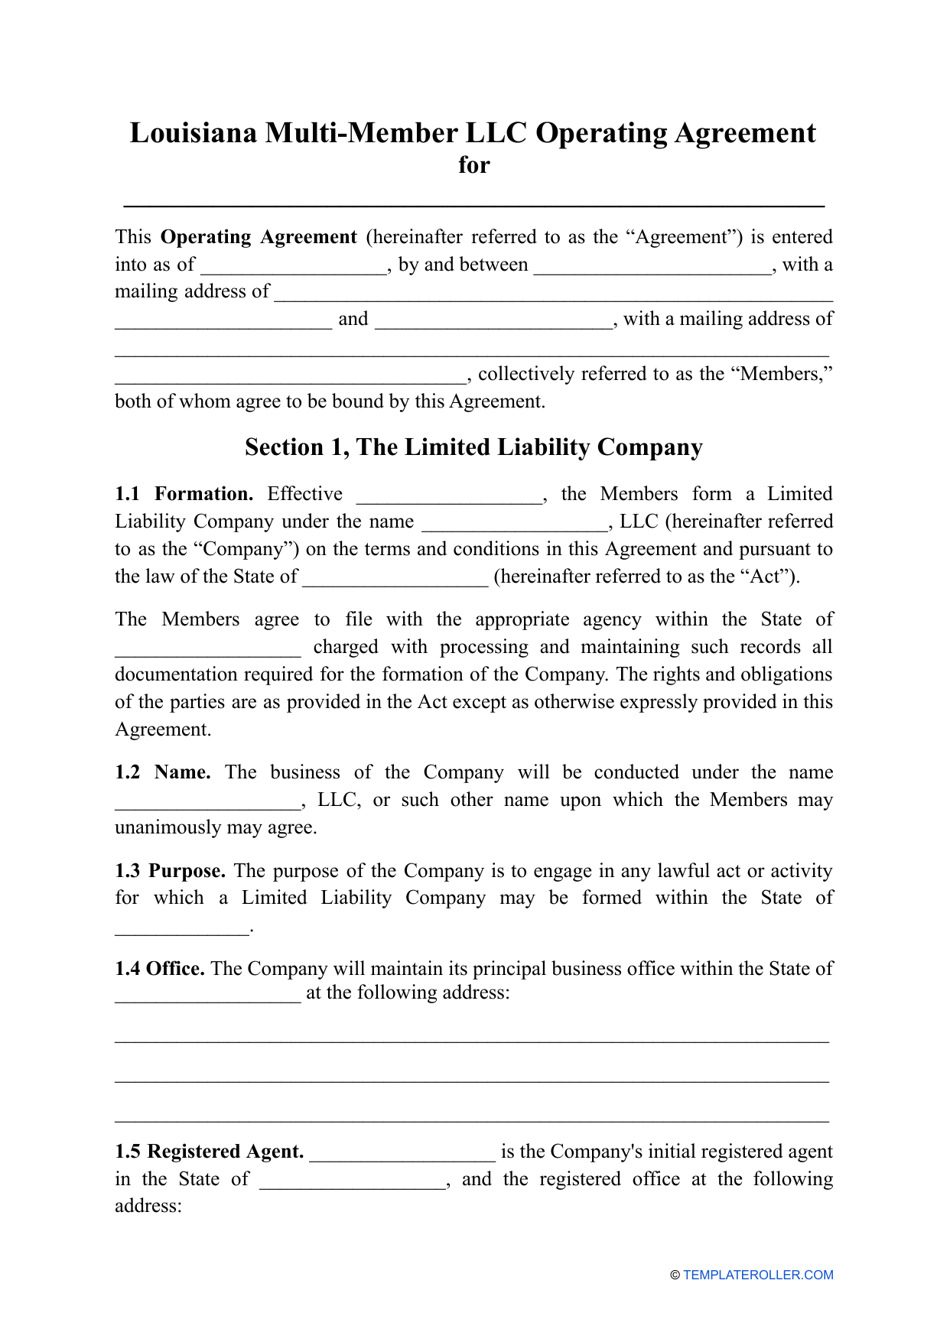 Multi-Member LLC Operating Agreement Template - Louisiana, Page 1